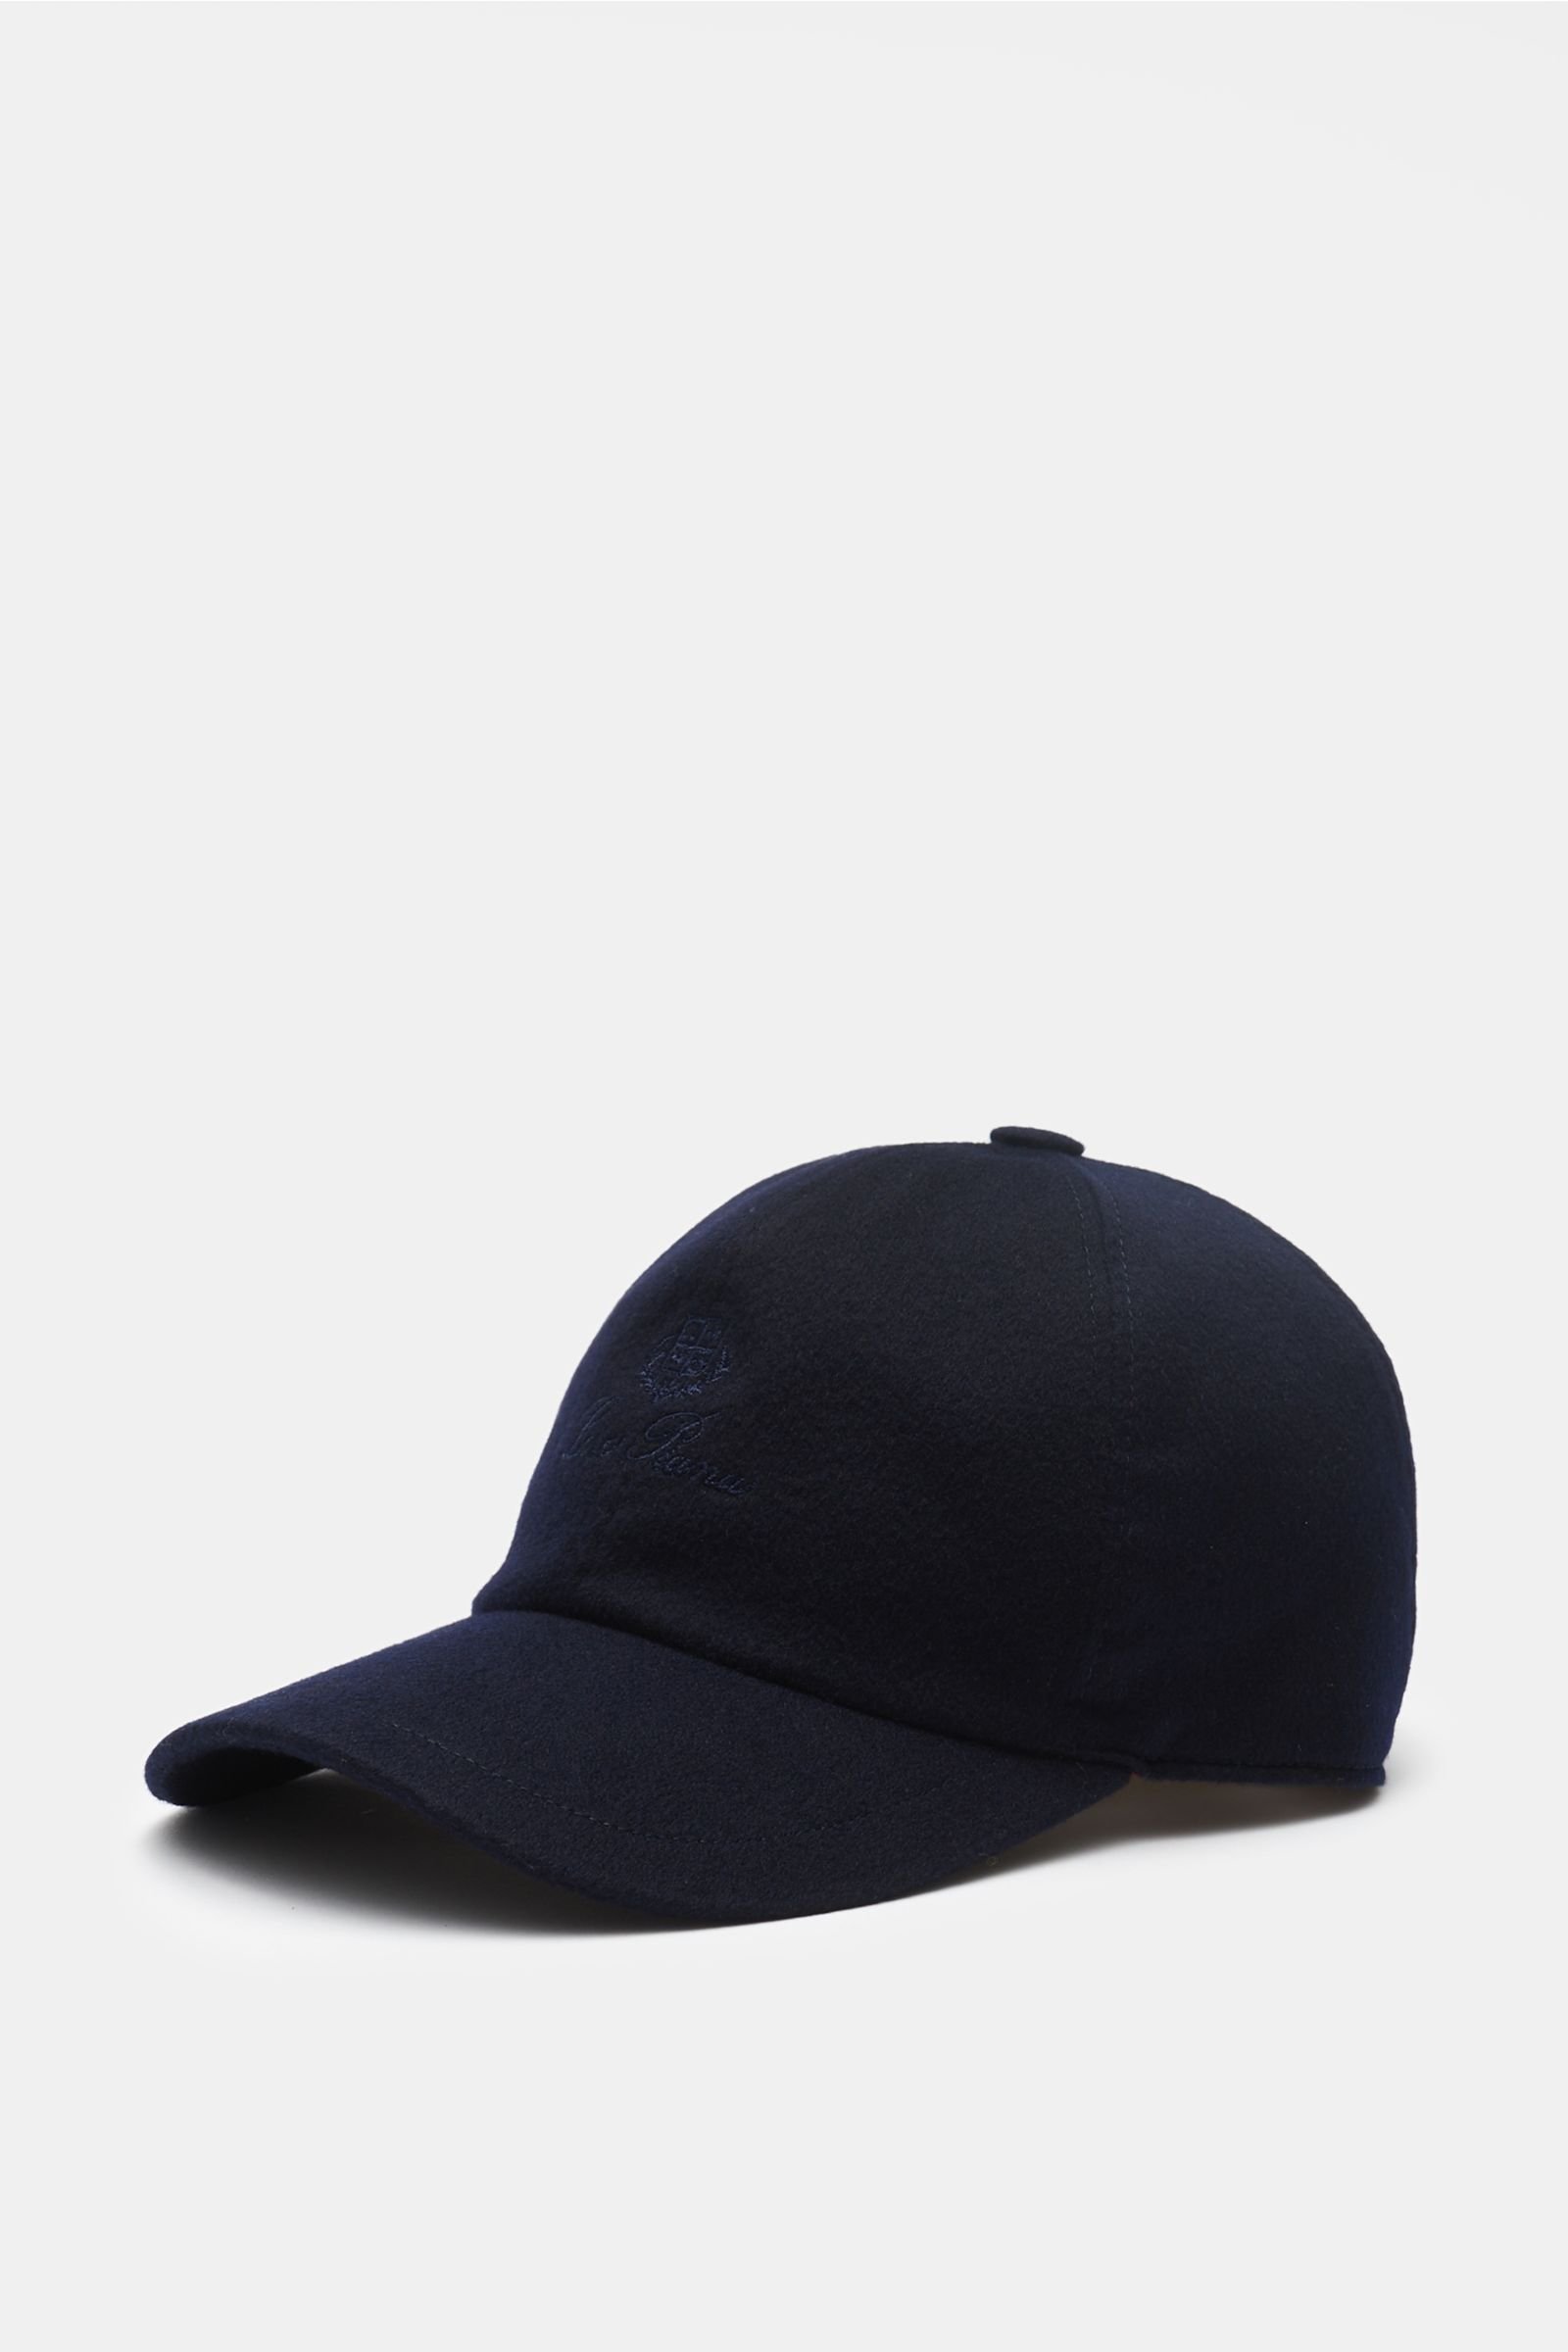 Cashmere baseball cap dark navy